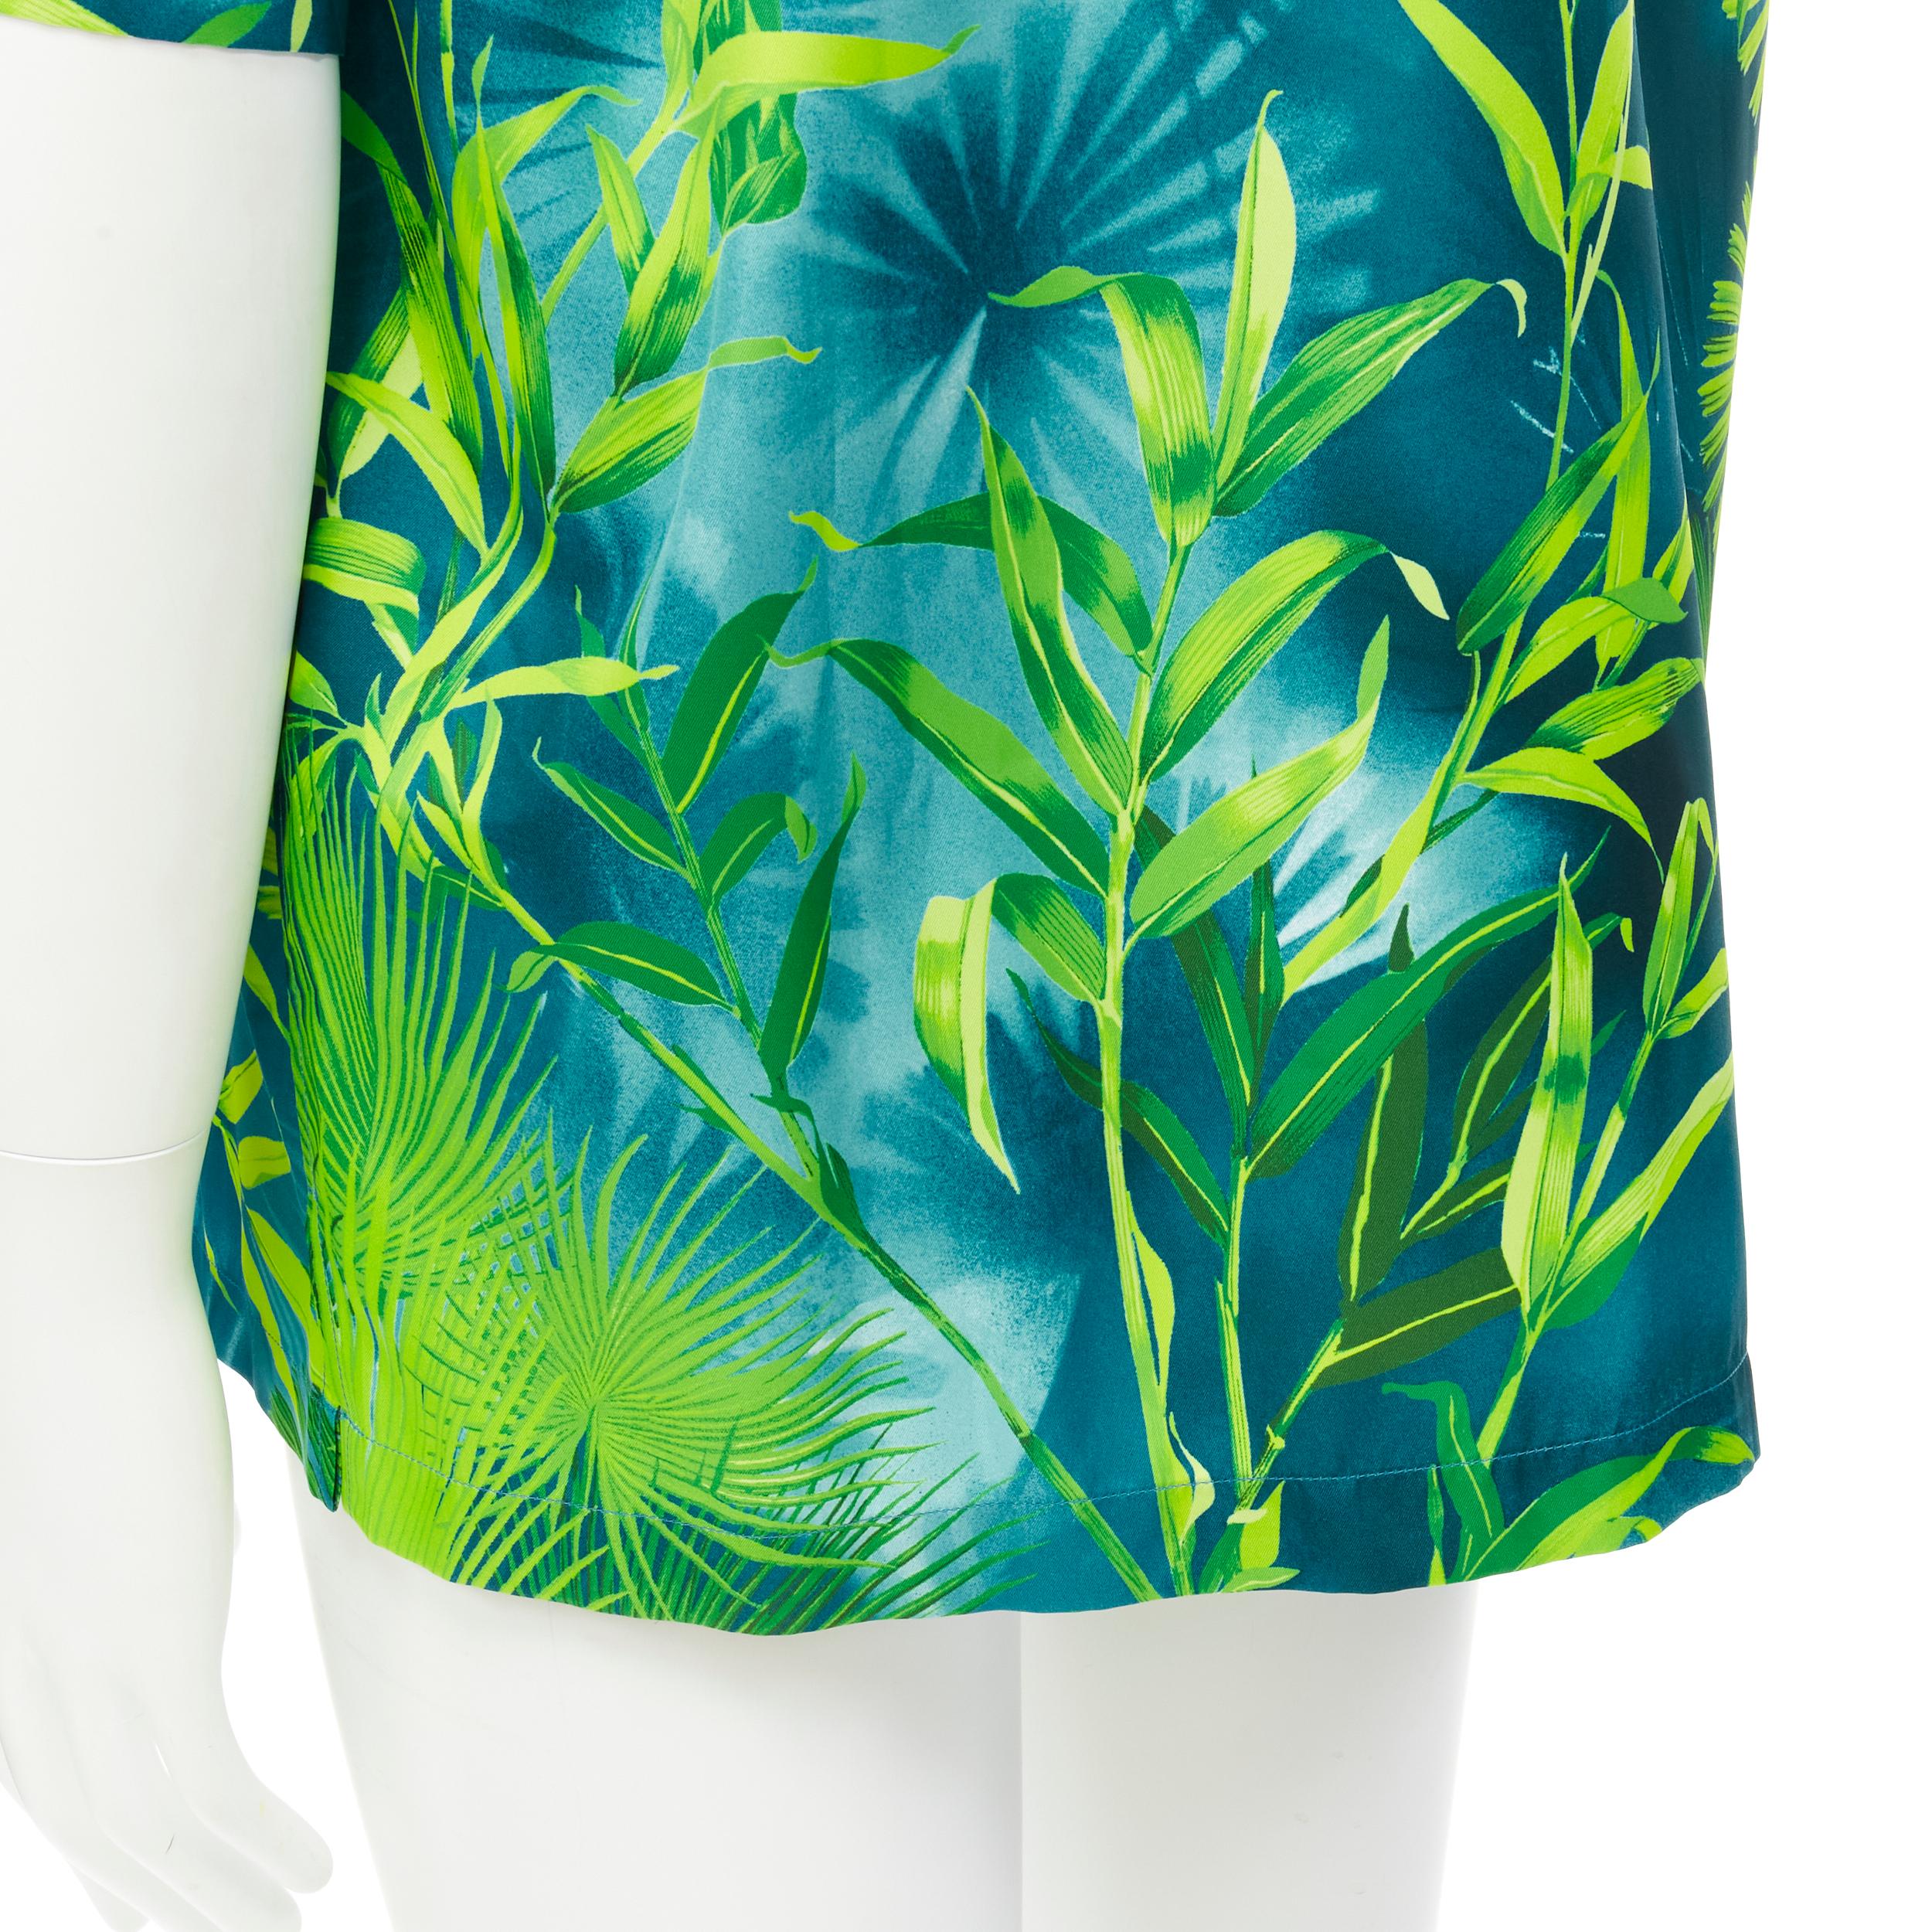 new VERSACE 2020 Iconic JLo Jungle print green tropical print shirt EU38 S 2